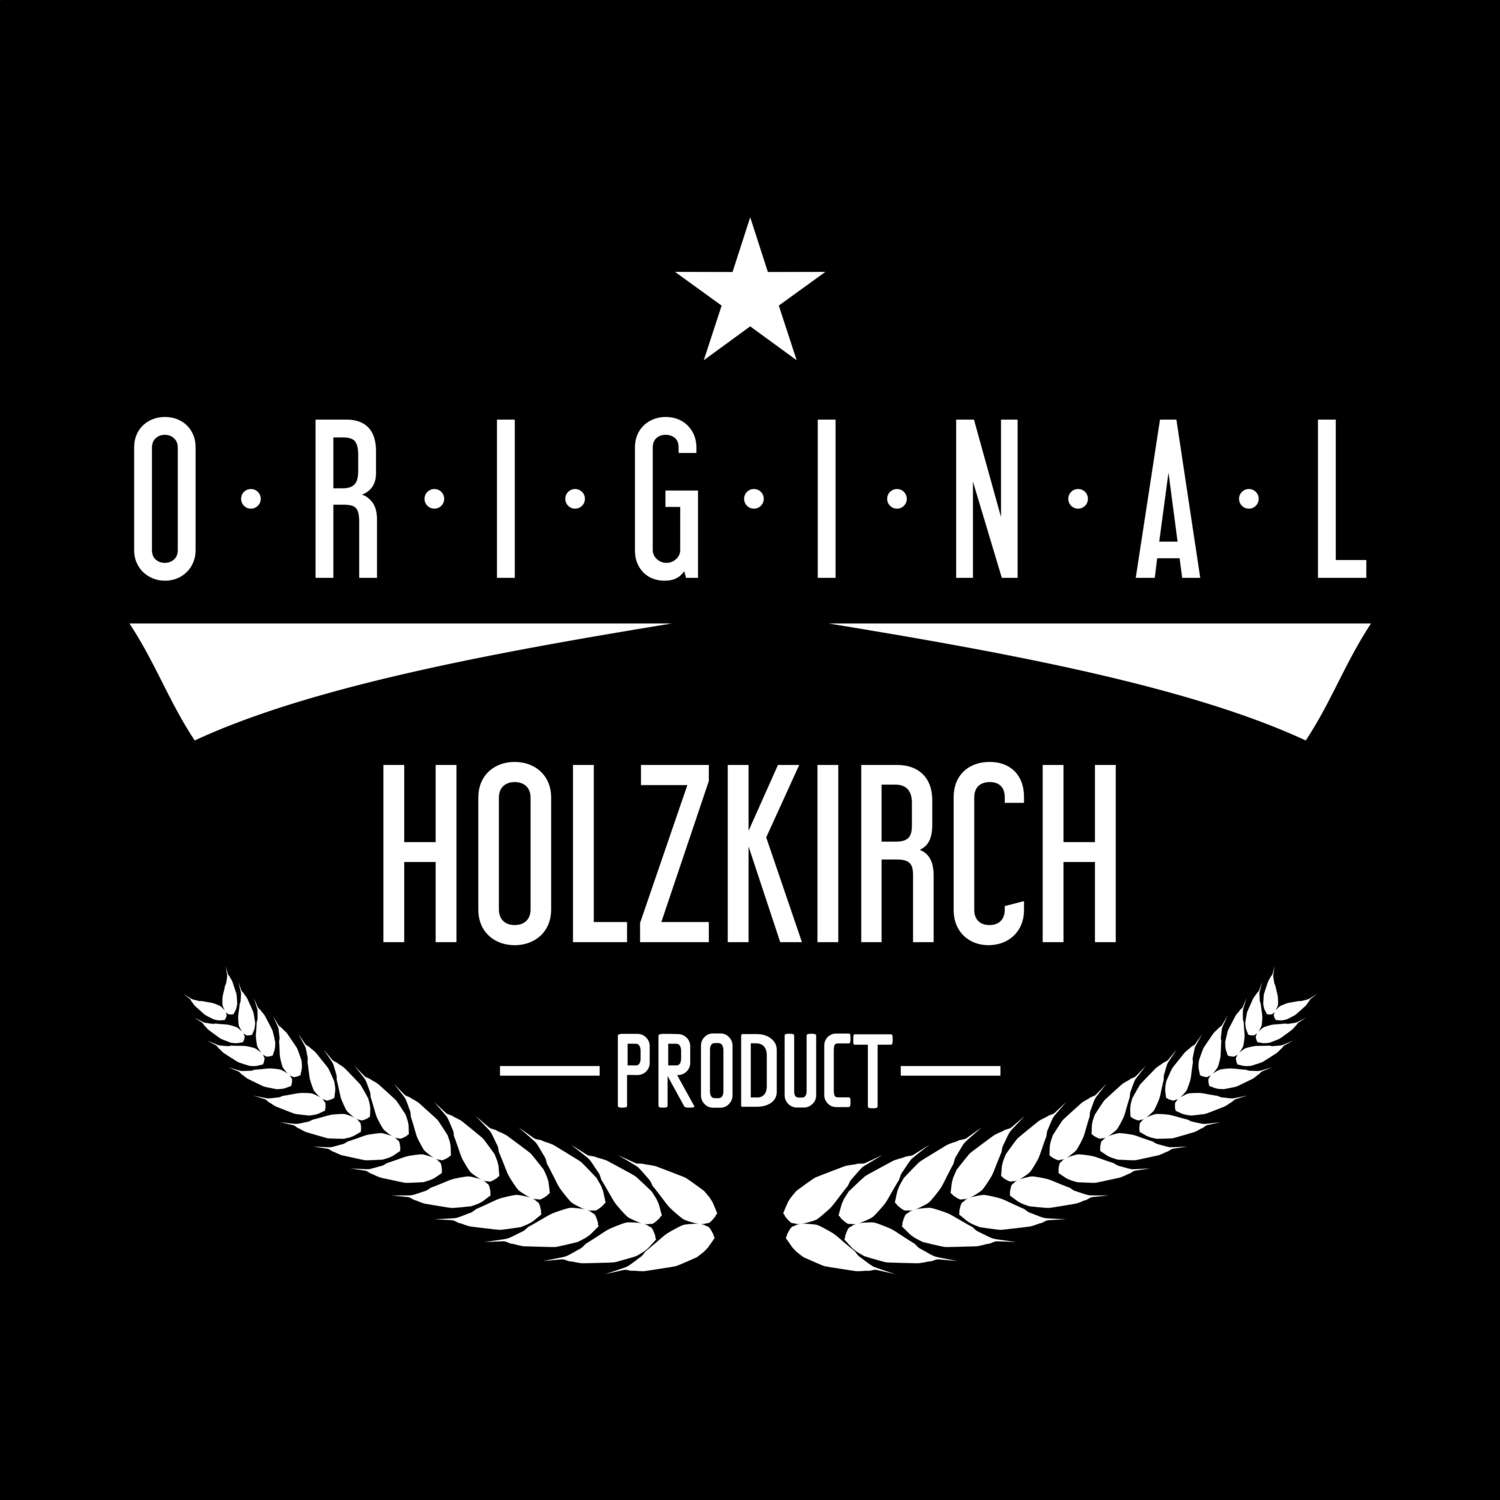 Holzkirch T-Shirt »Original Product«